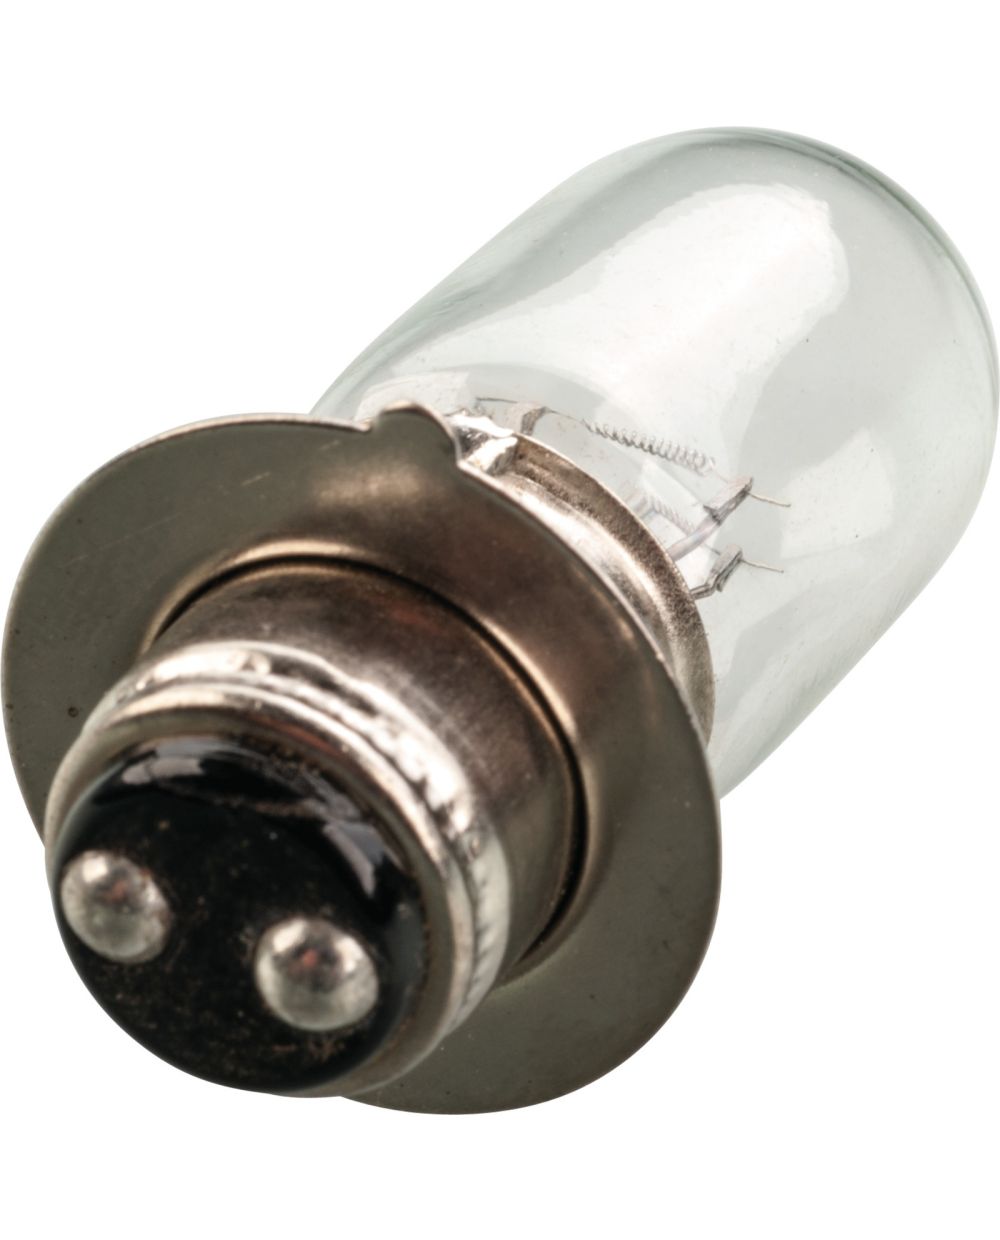 Scooter Light Bulb 12V 10W, Fits: Universal